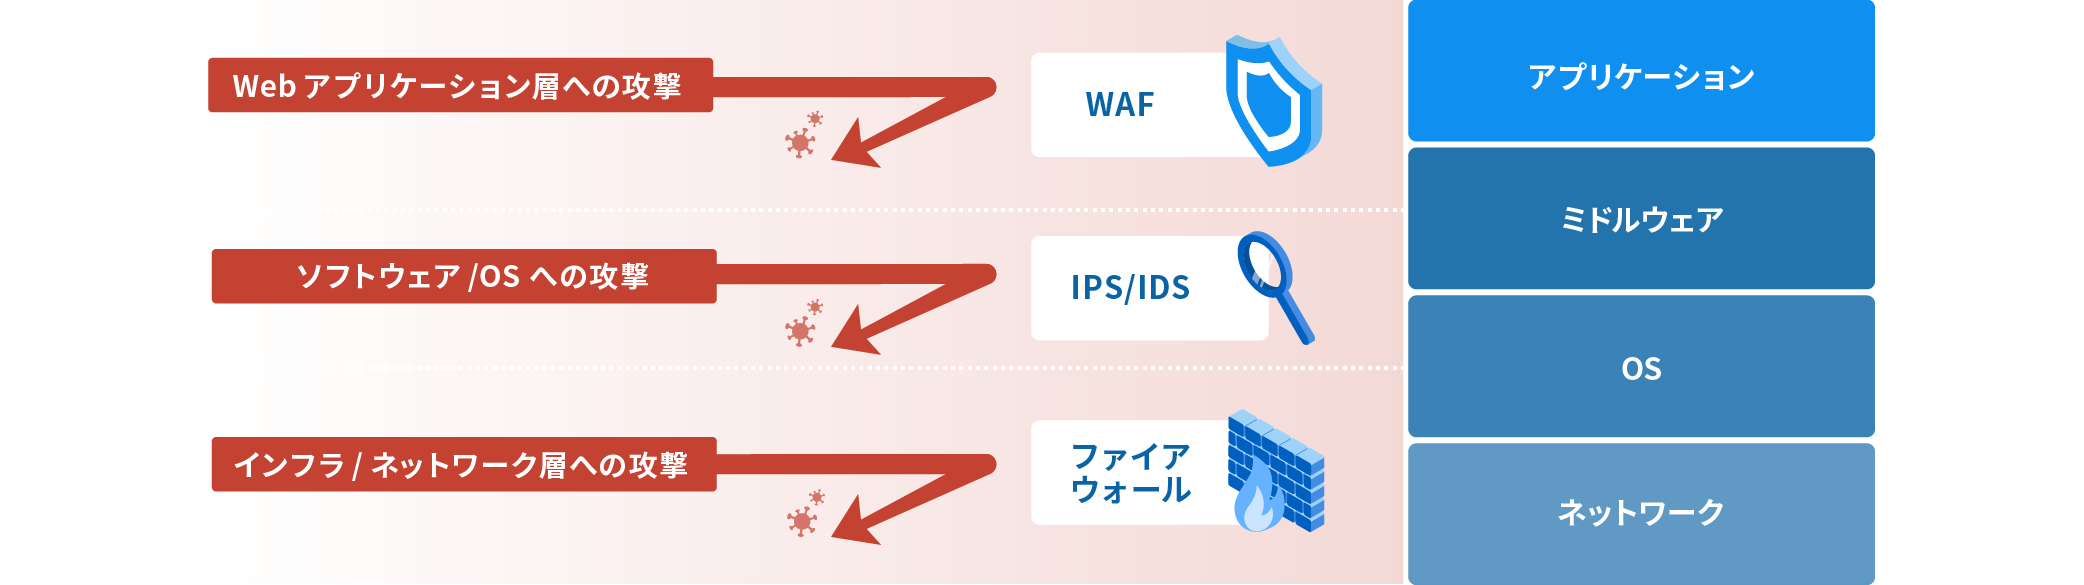 WAF・IPS/IDS・ファイアウォールの違い